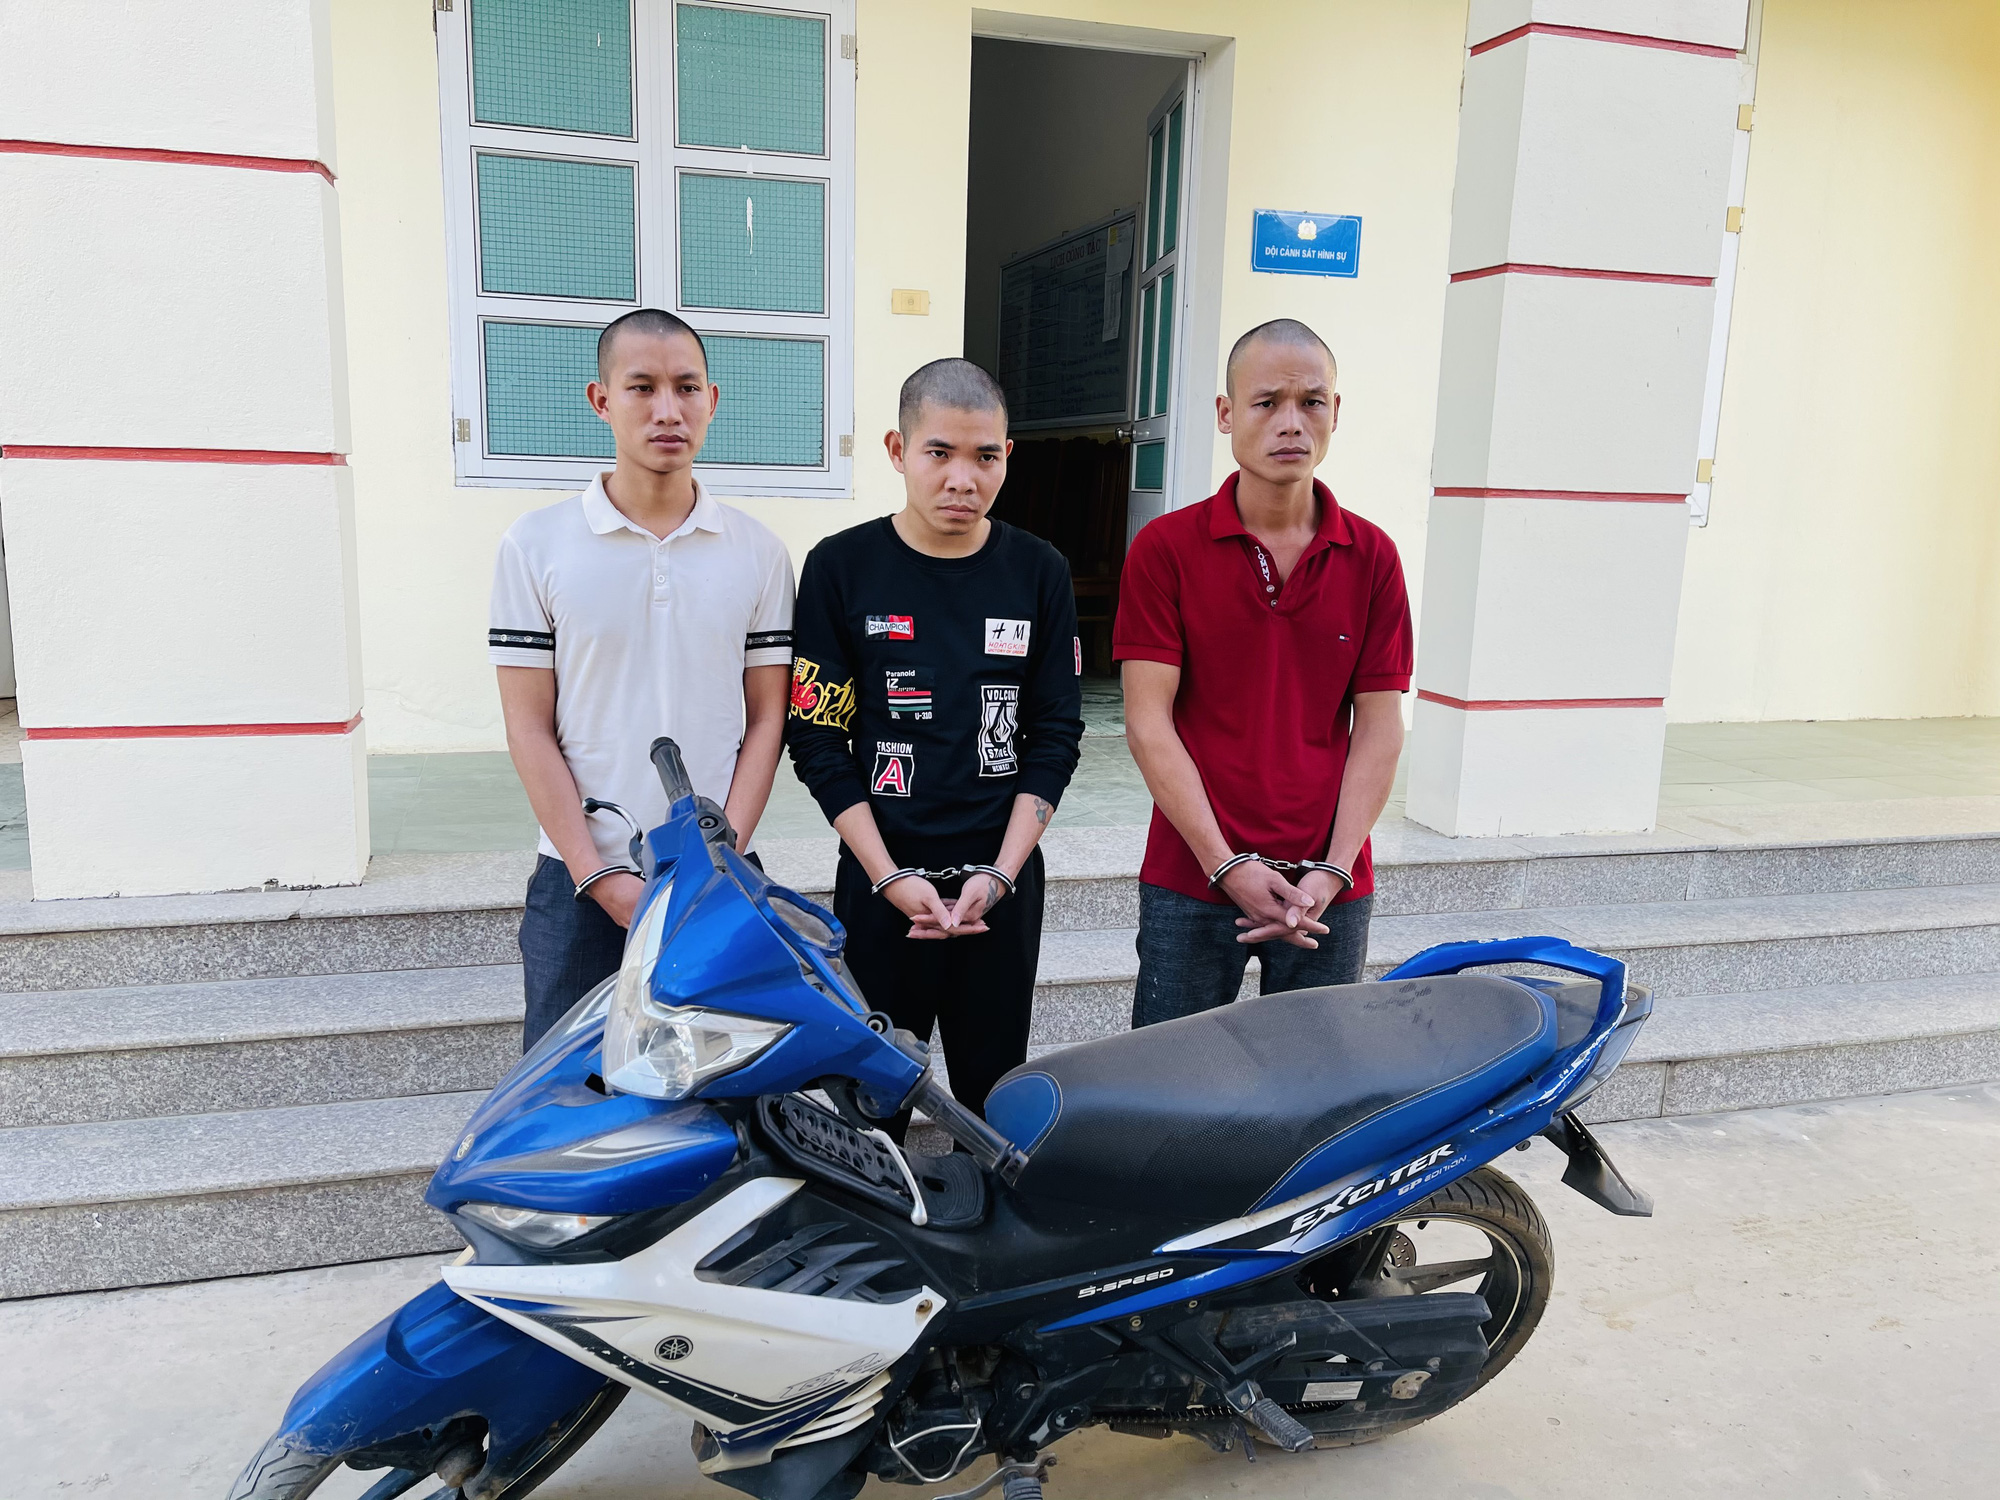 Three arrested for kidnapping debtor, demanding ransom in north-central Vietnam